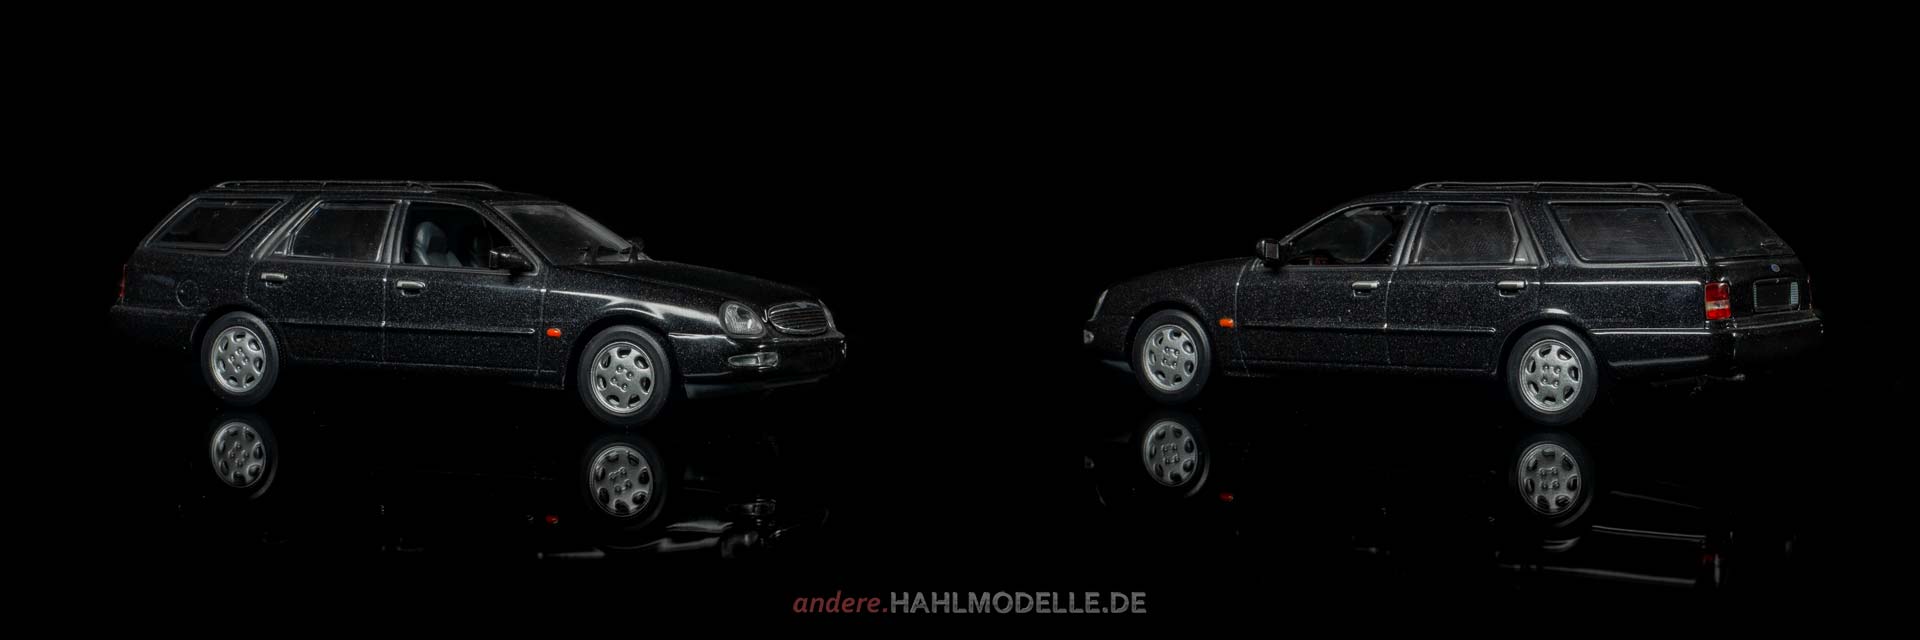 Ford Scorpio | Kombi | Minichamps | www.andere.hahlmodelle.de